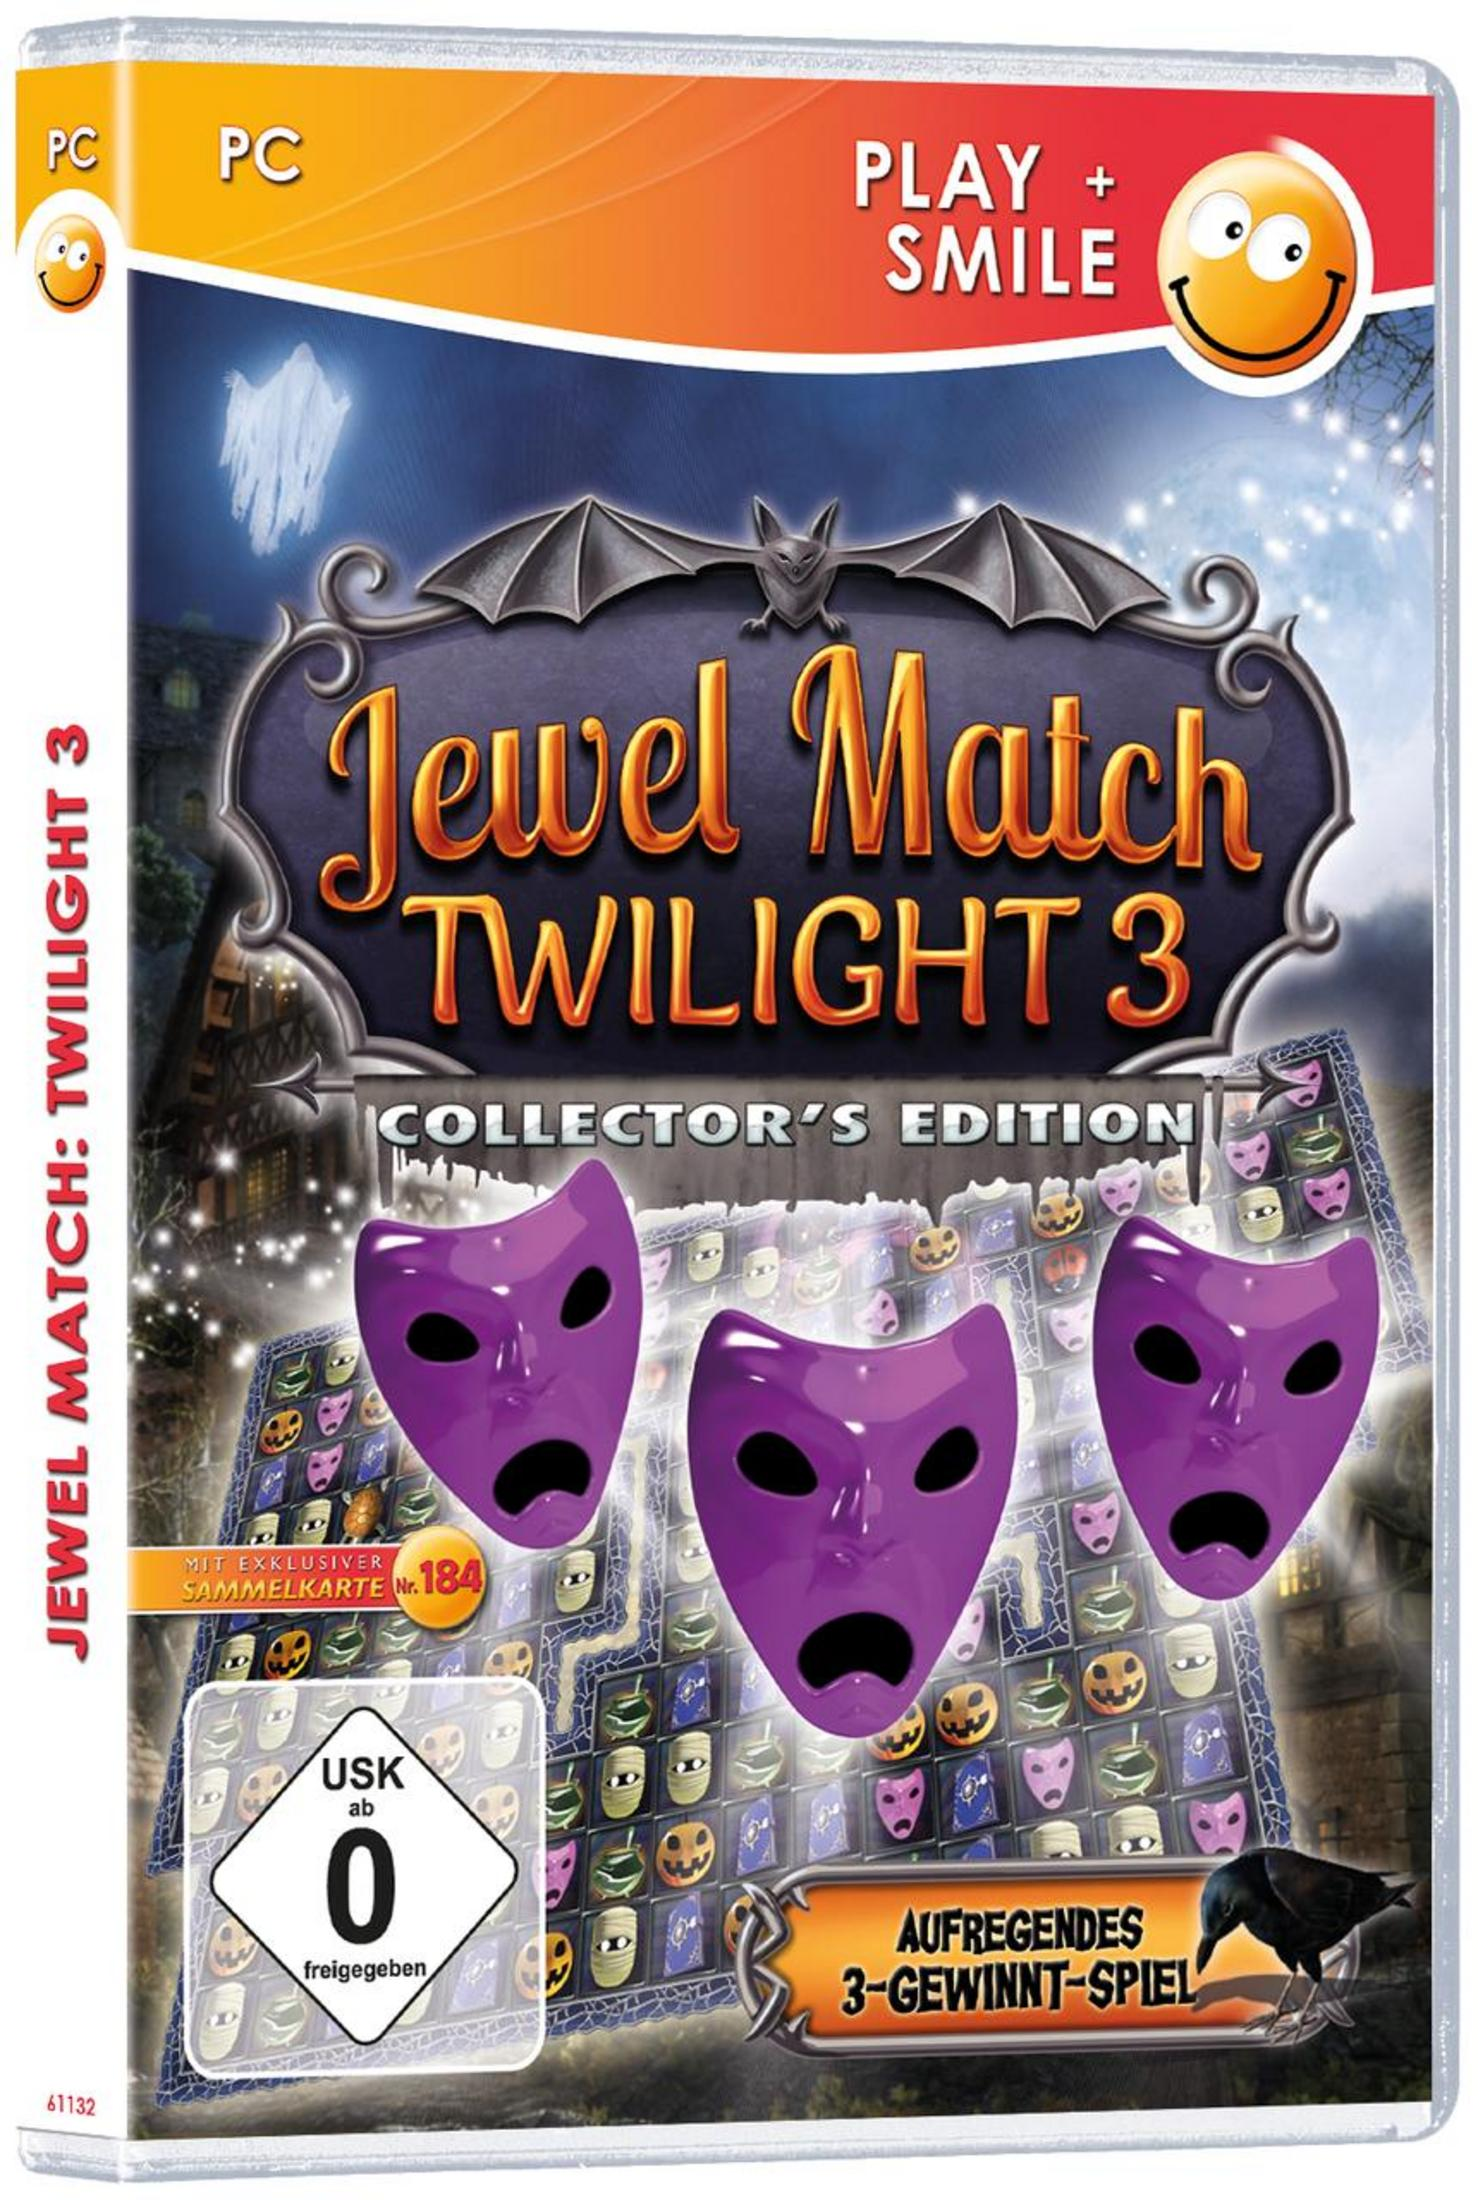 S MATCH-TWILIGHT - [PC] 3 EDITION) JEWEL (COLLECTOR